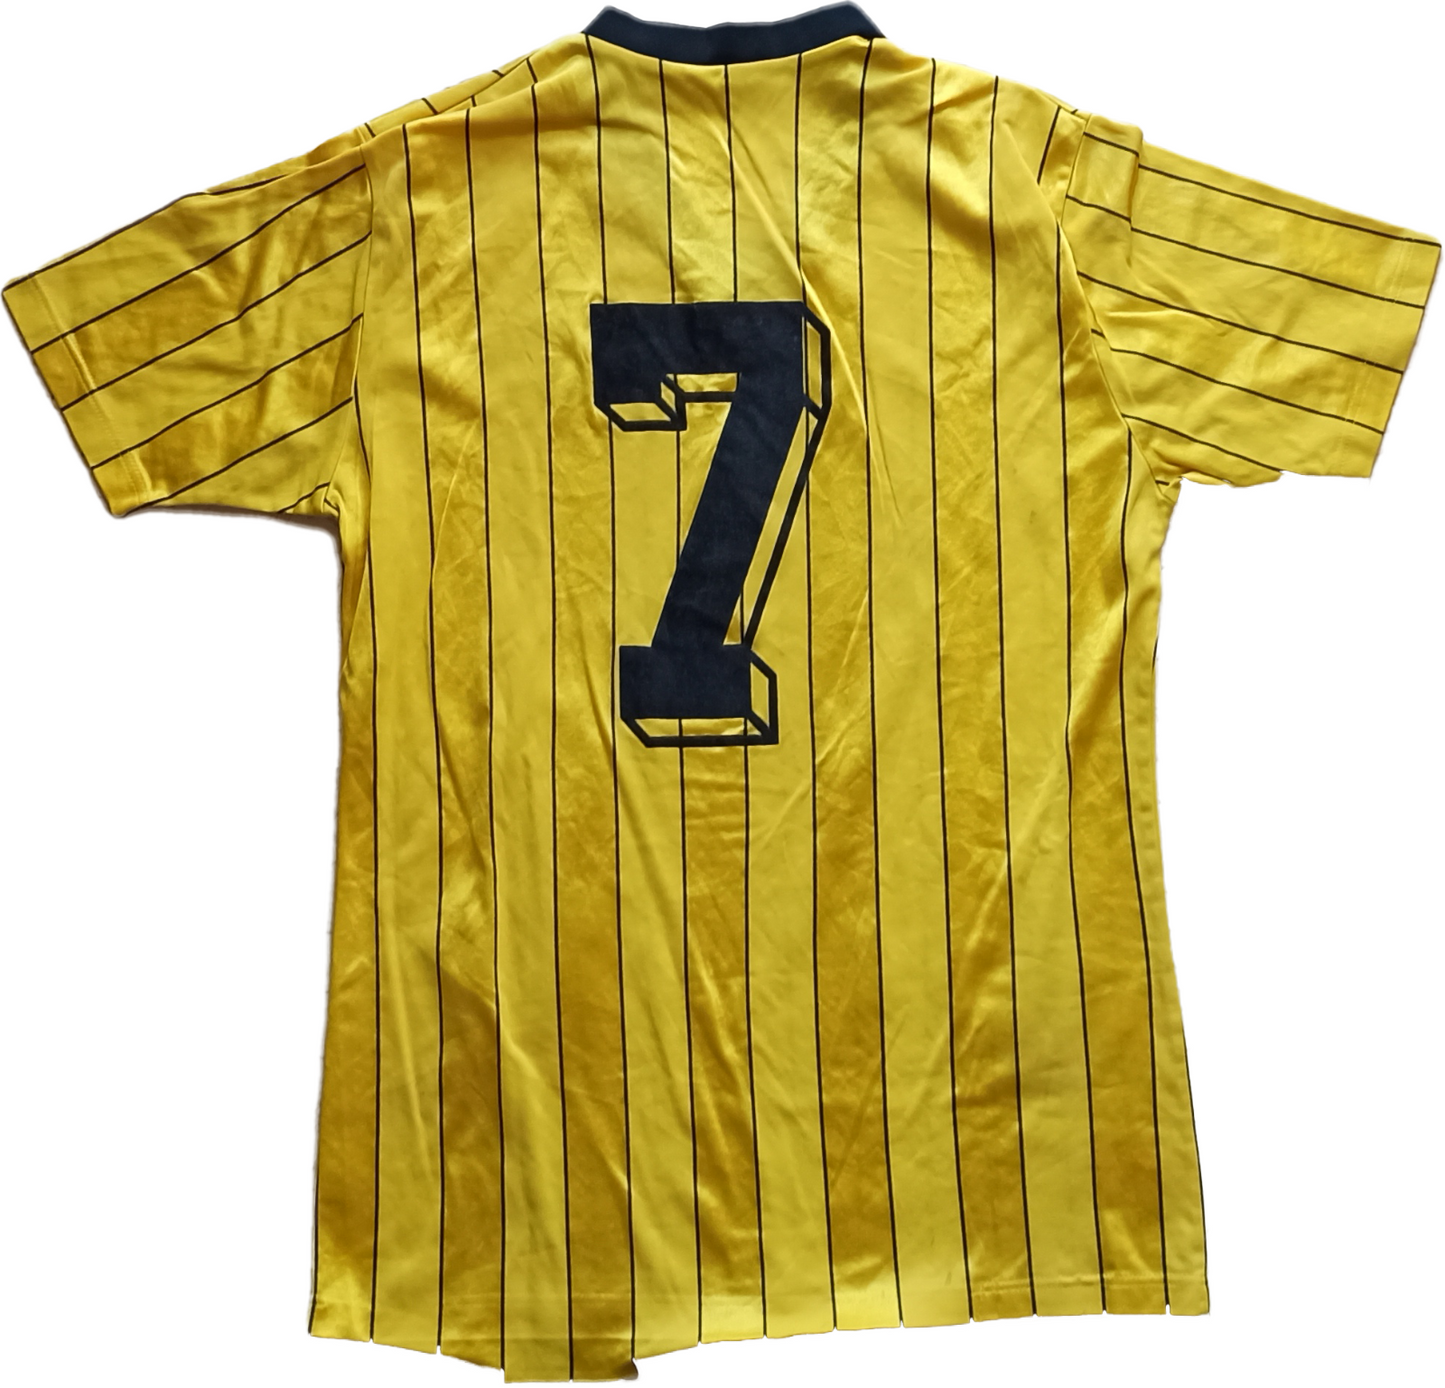 maglia trikot Borussia Dortmund BVB 1979 Erima Adidas match worn #7 Medium